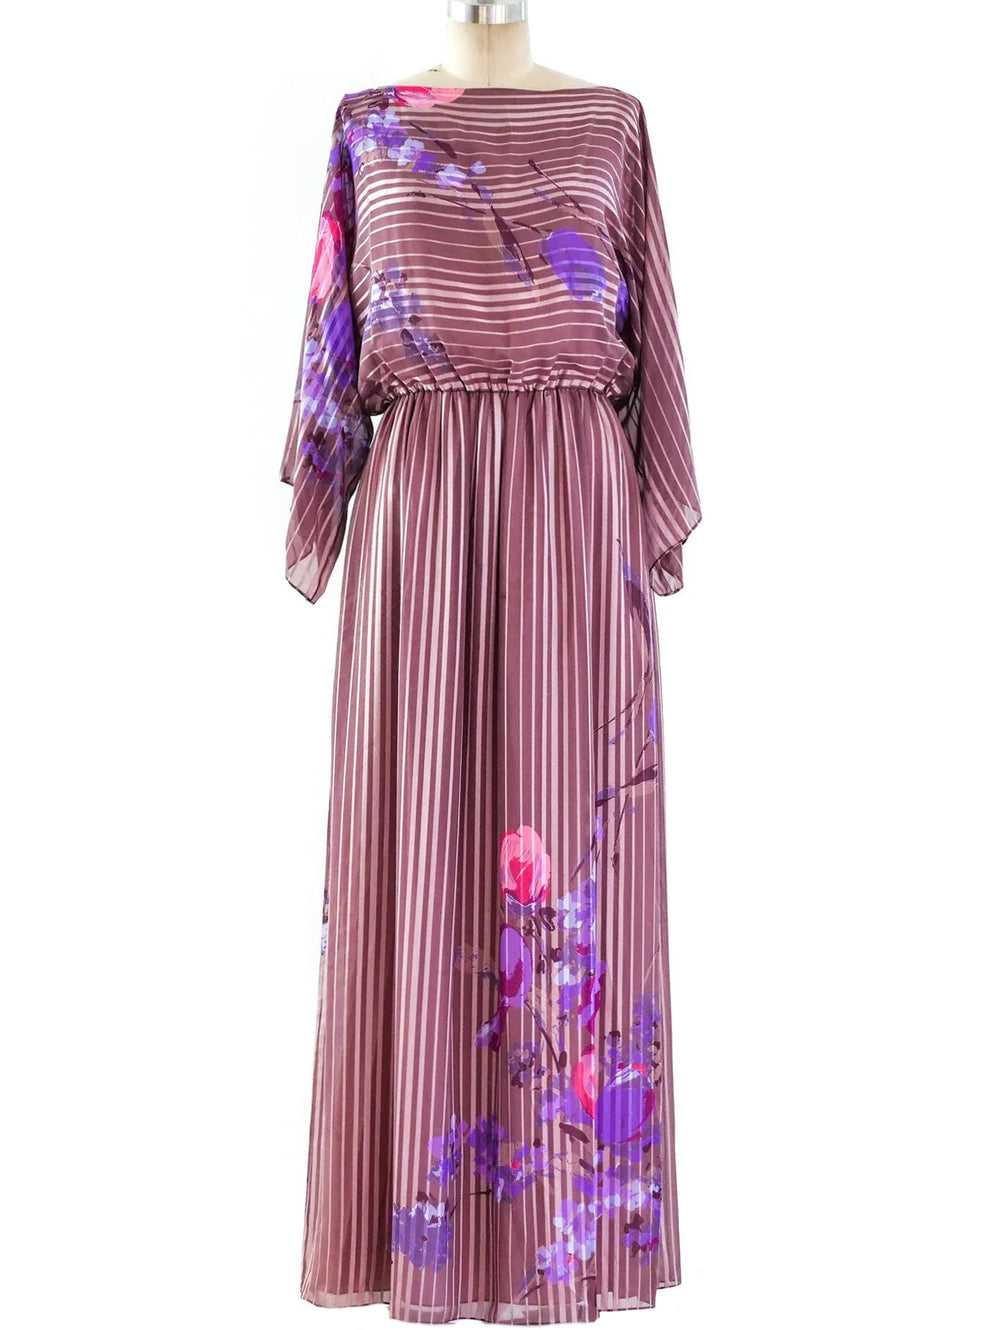 Hanae Mori Floral Chiffon Gown - image 1